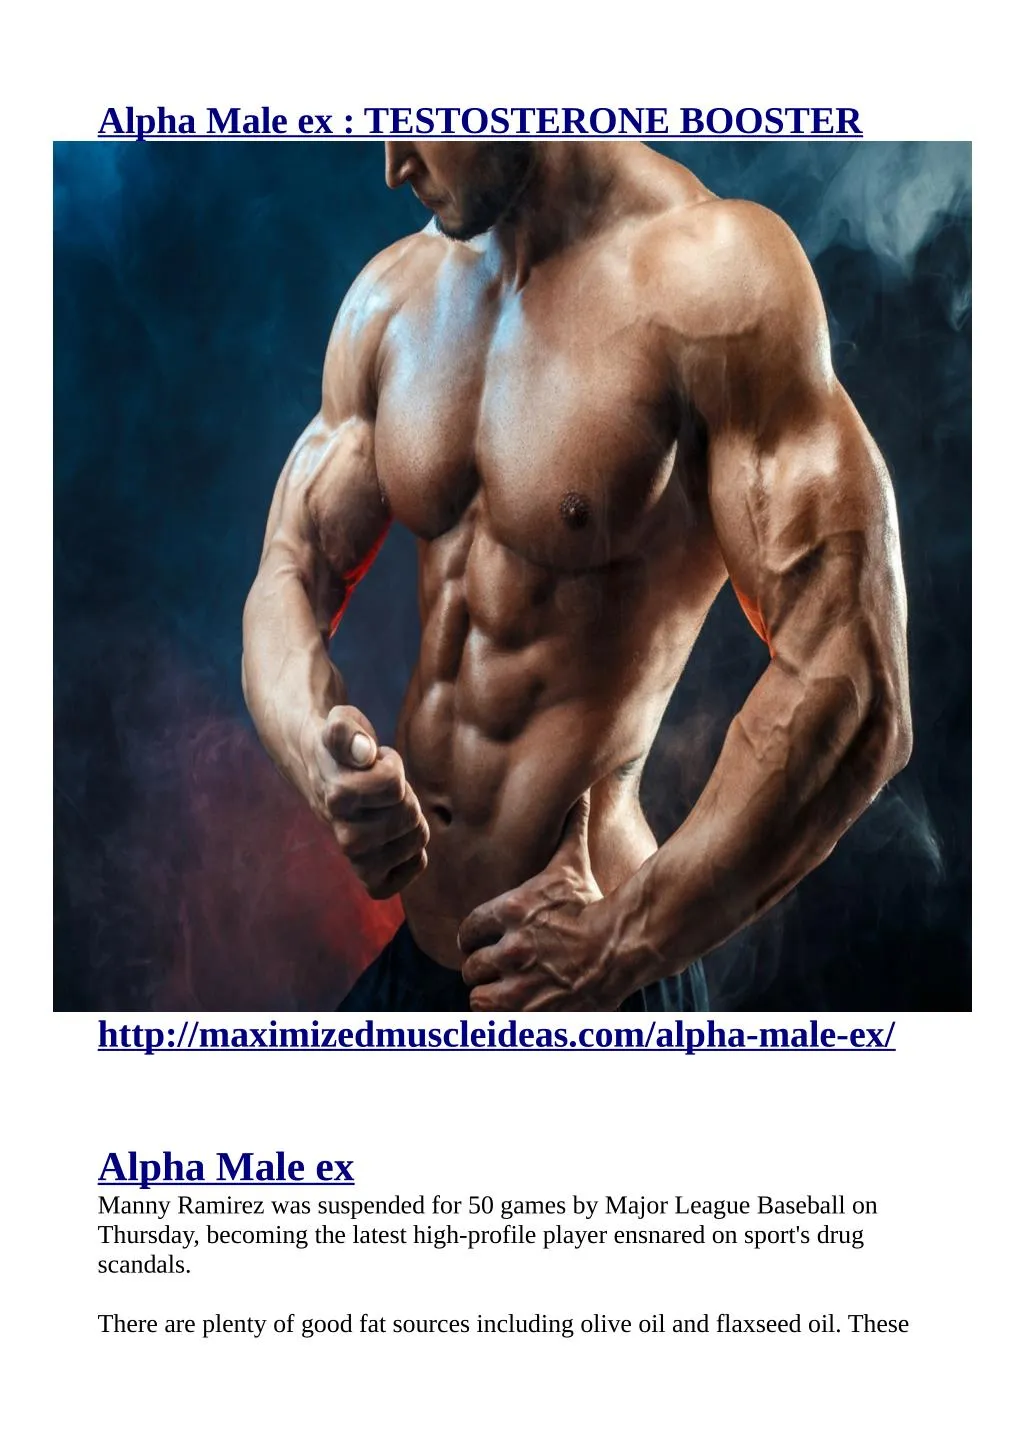 alpha male ex testosterone booster